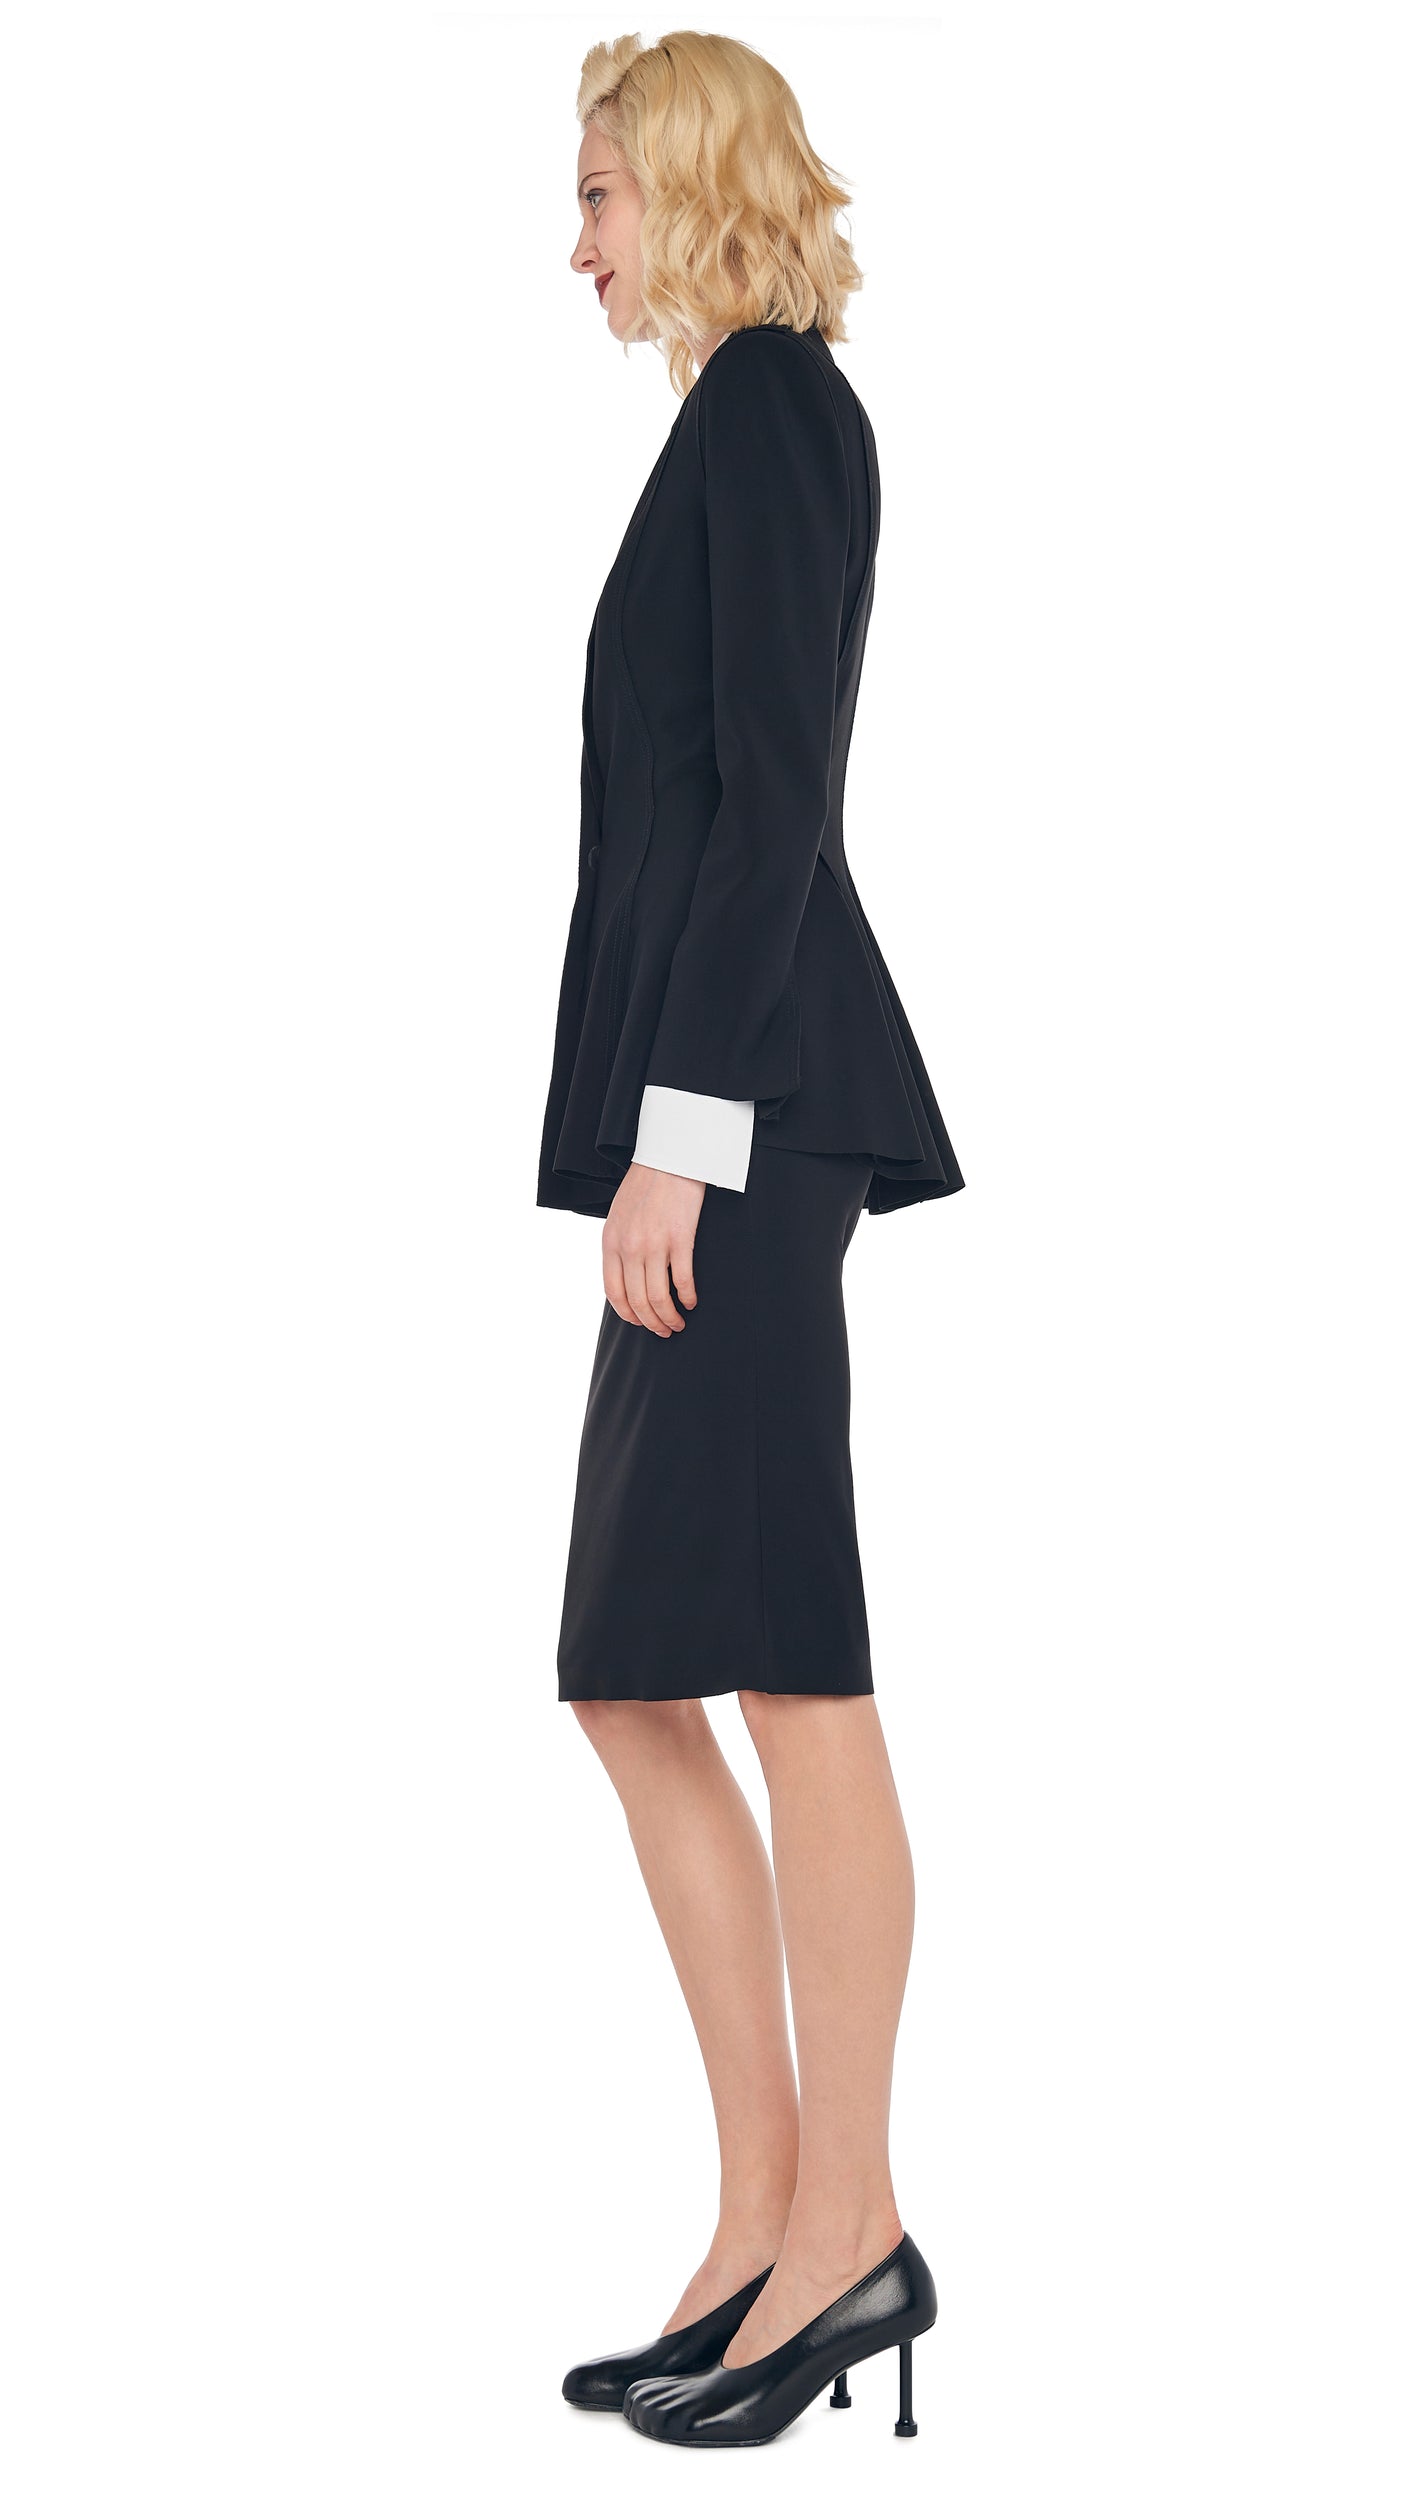 peplum skirt suit | Fashion, Fashion classy, Nice dresses